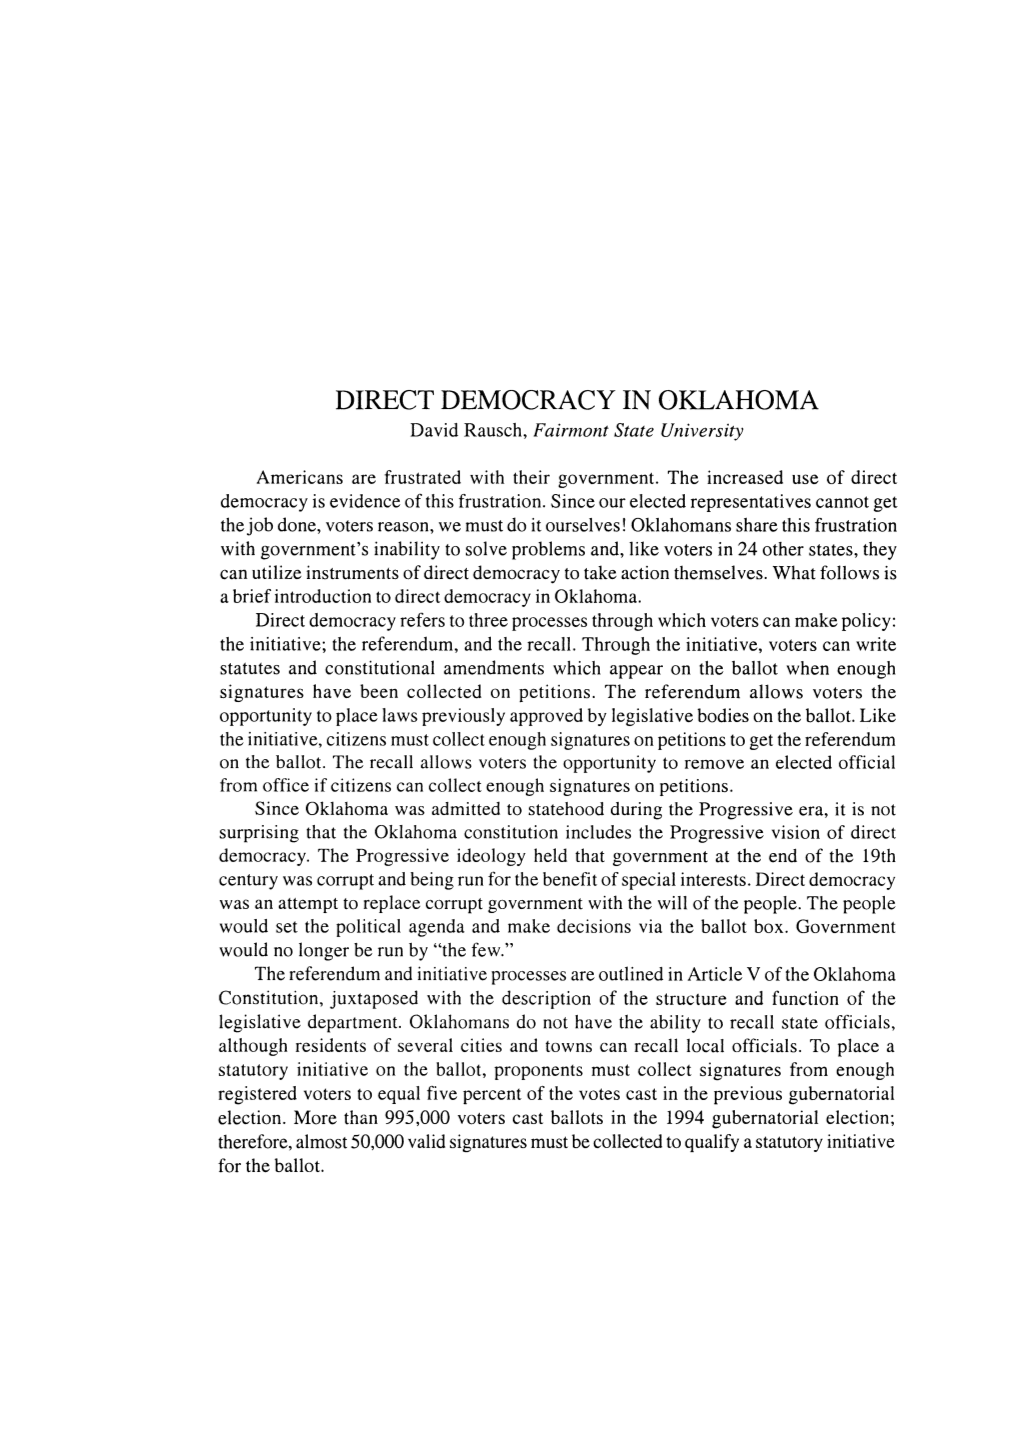 DIRECT DEMOCRACY in OKLAHOMA David Rausch, Fairmont State University